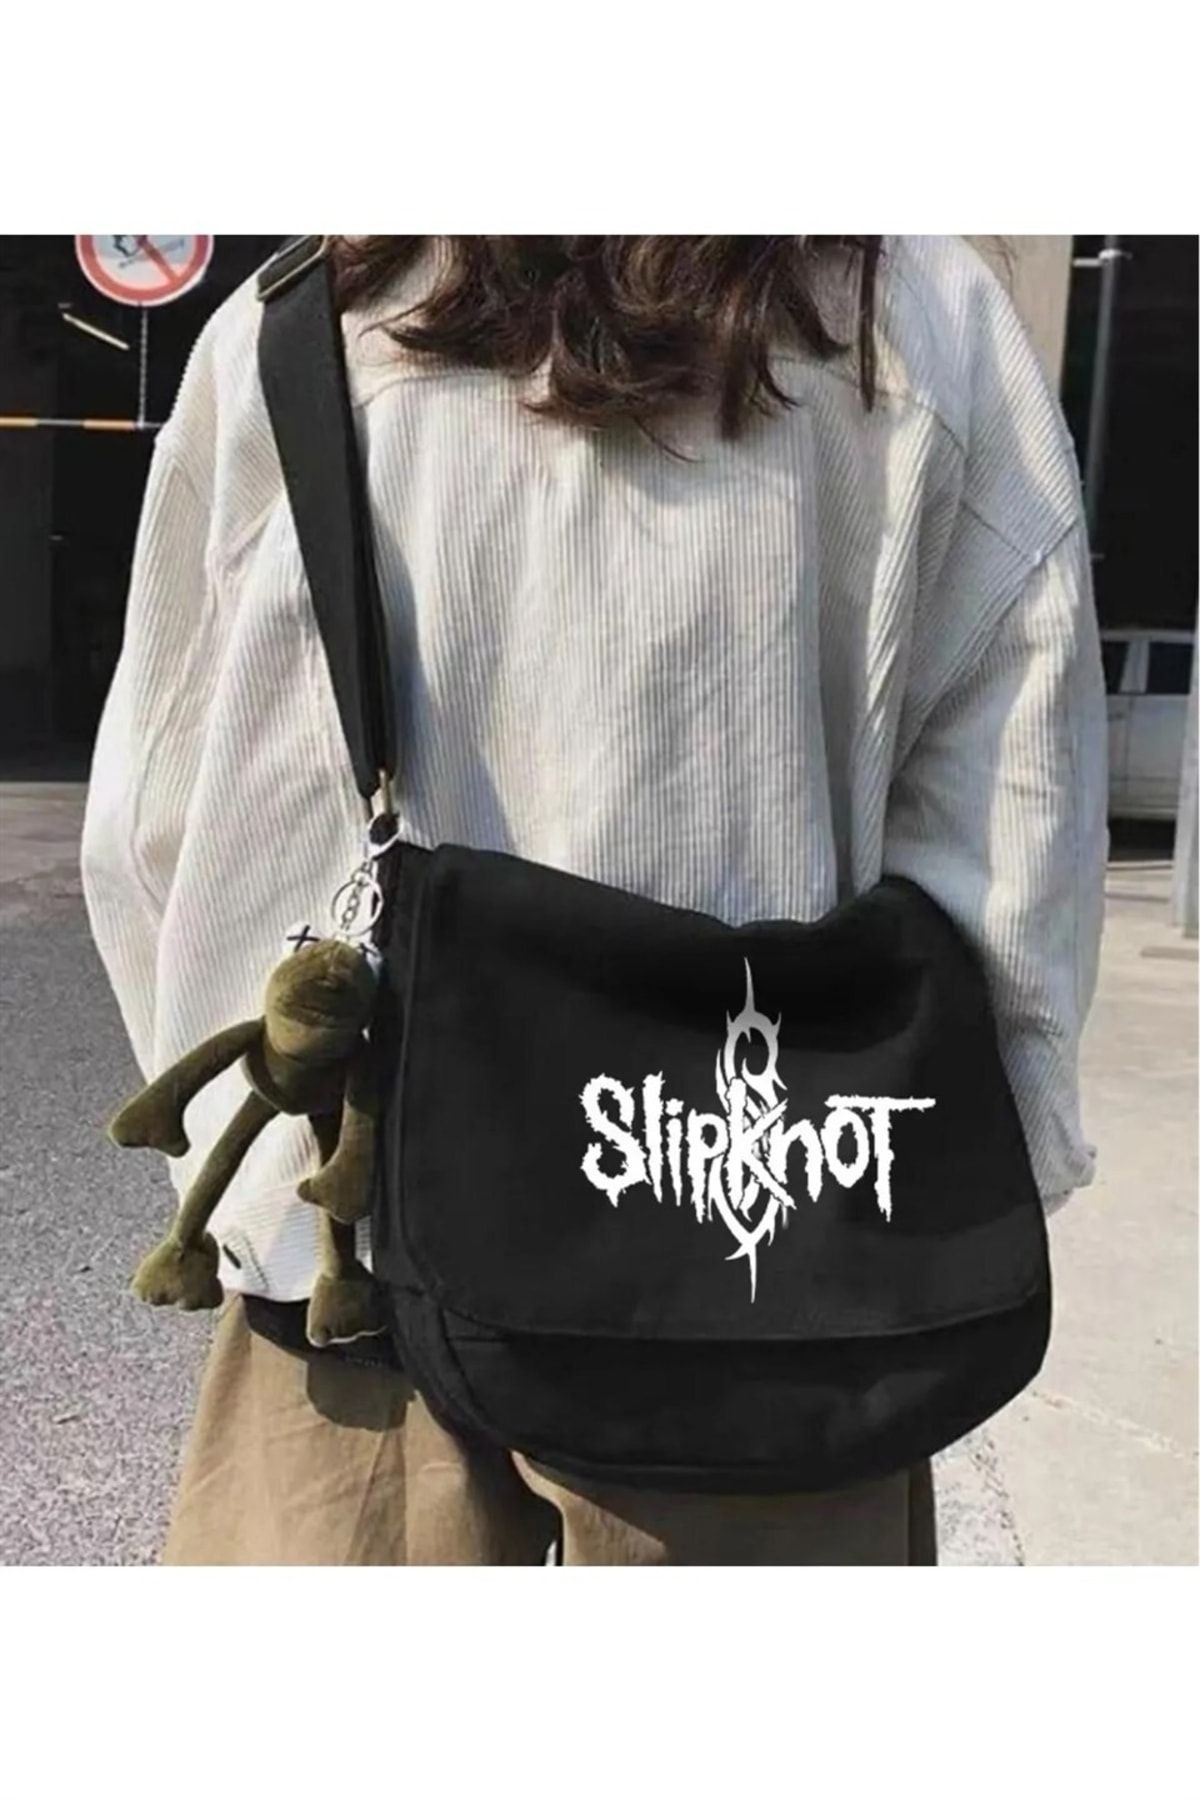 Slipknot Official We Are #3 Weekender Tote Bag by Morris Nuo - Pixels